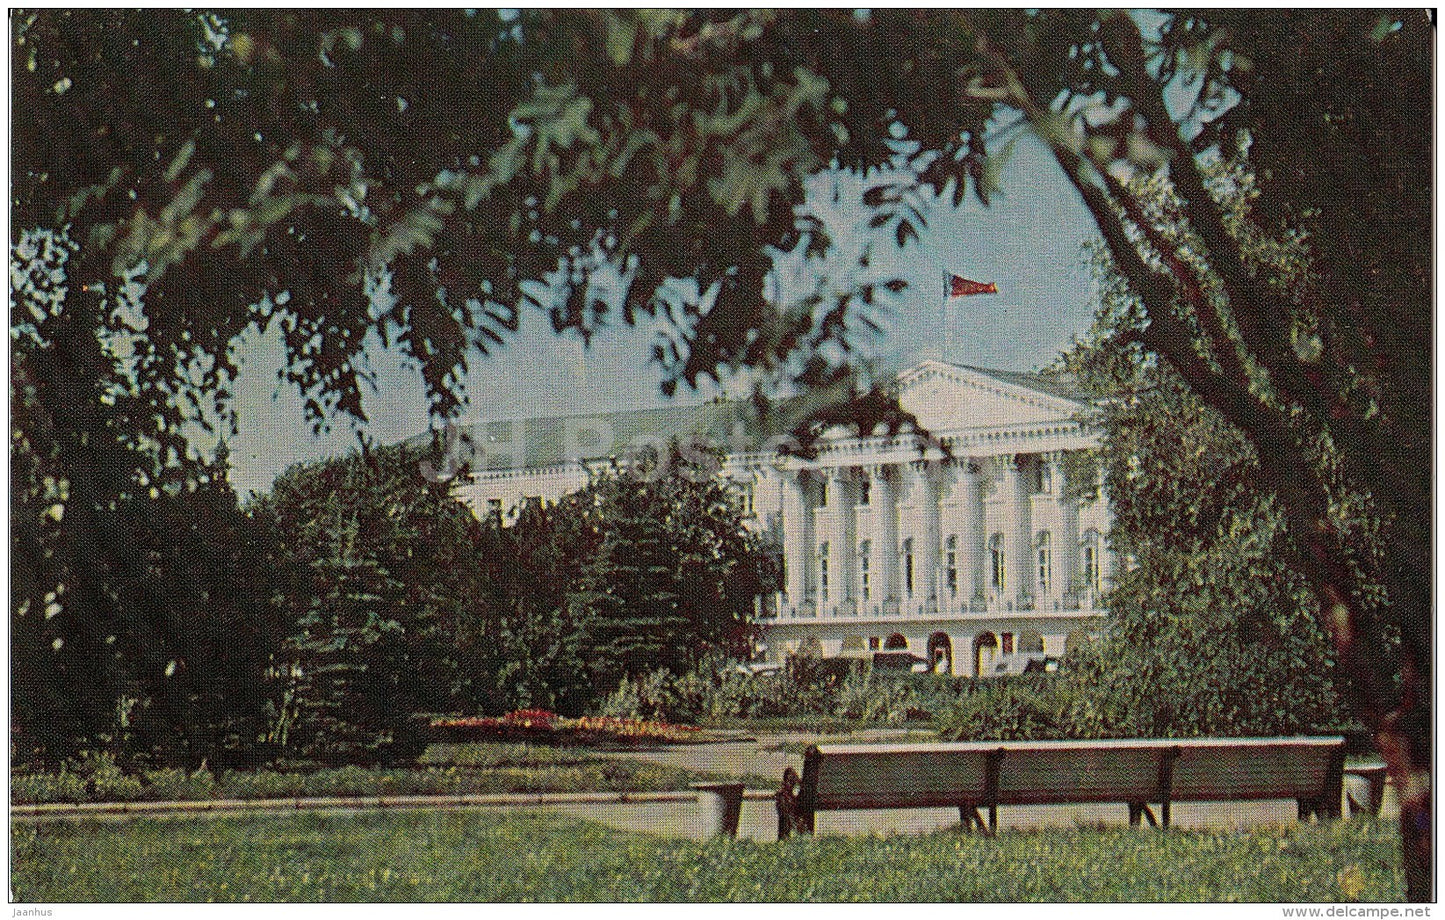 building of regional executive committee - Yaroslavl - 1978 - Russia USSR - unused - JH Postcards